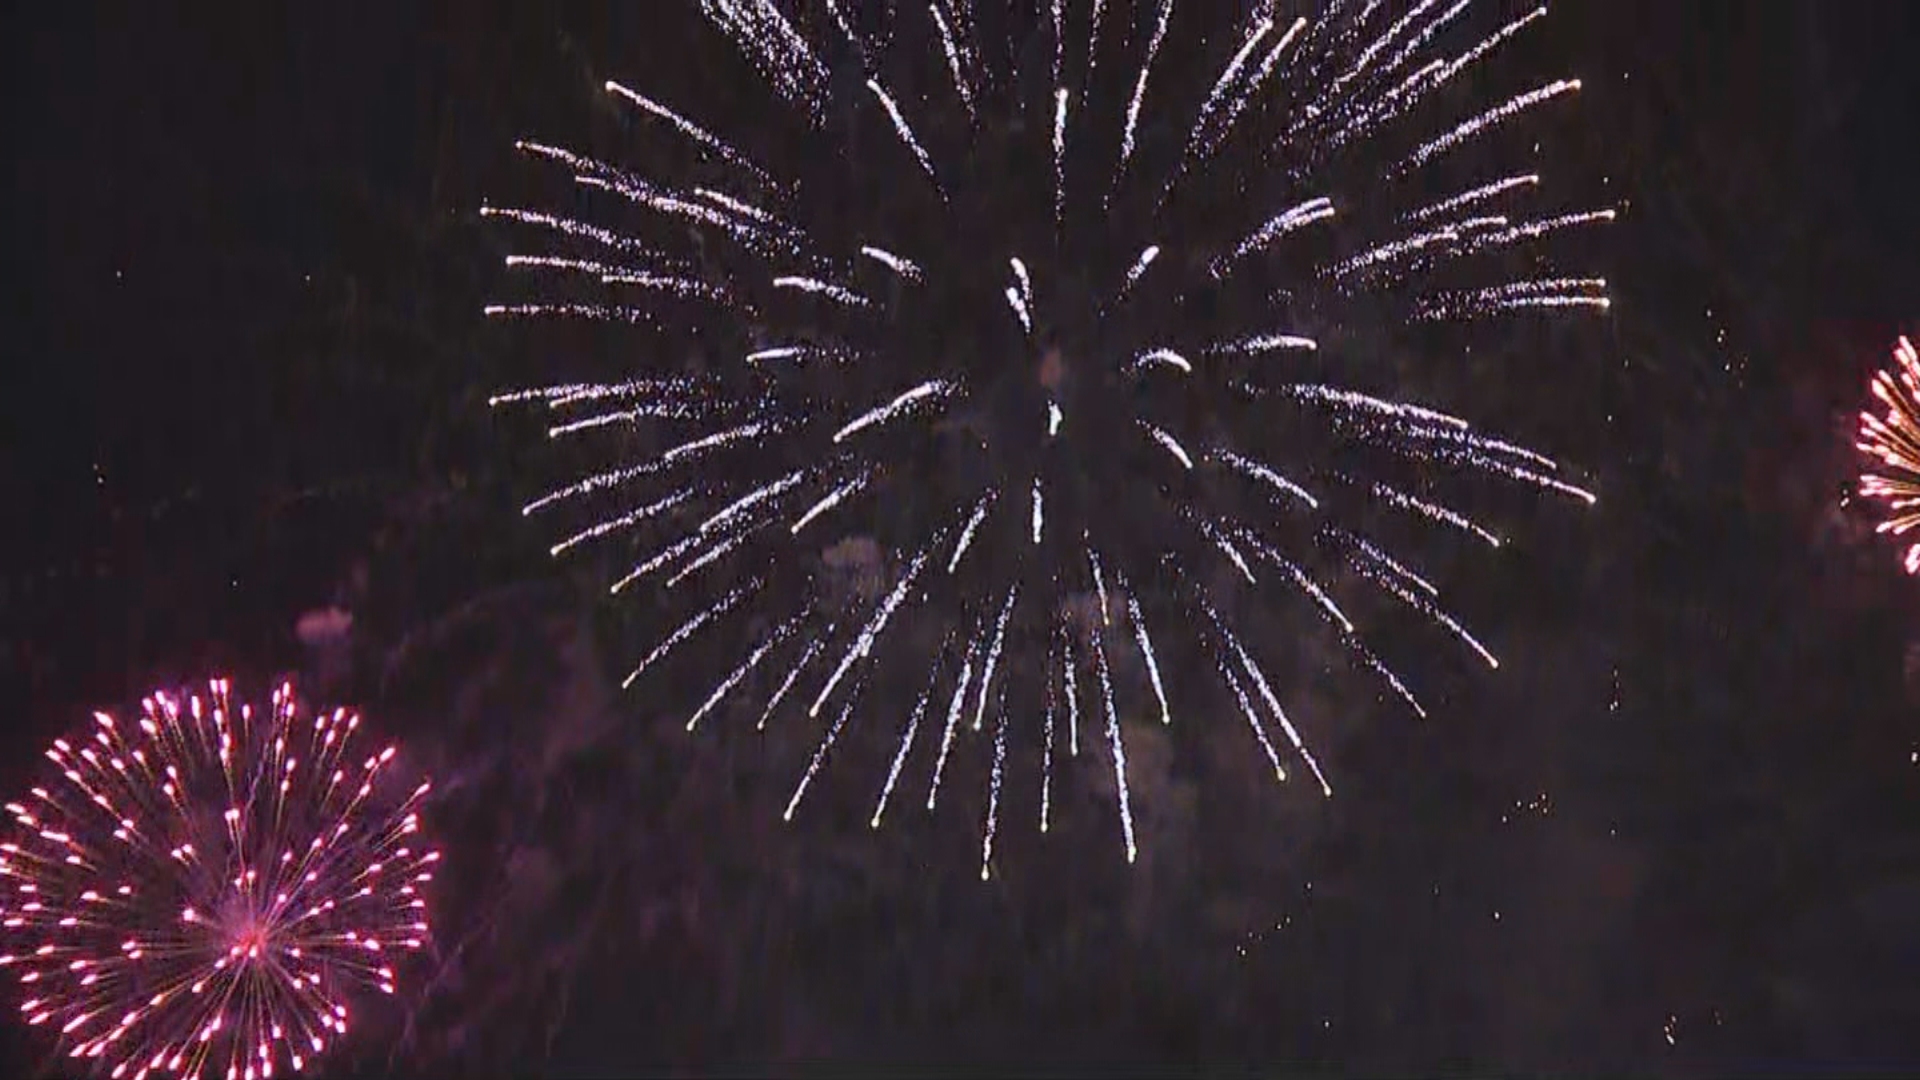 Memorial Day Weekend In Philadelphia Is In Full Swing As Local Residents Attend Fireworks At Penn's Landing